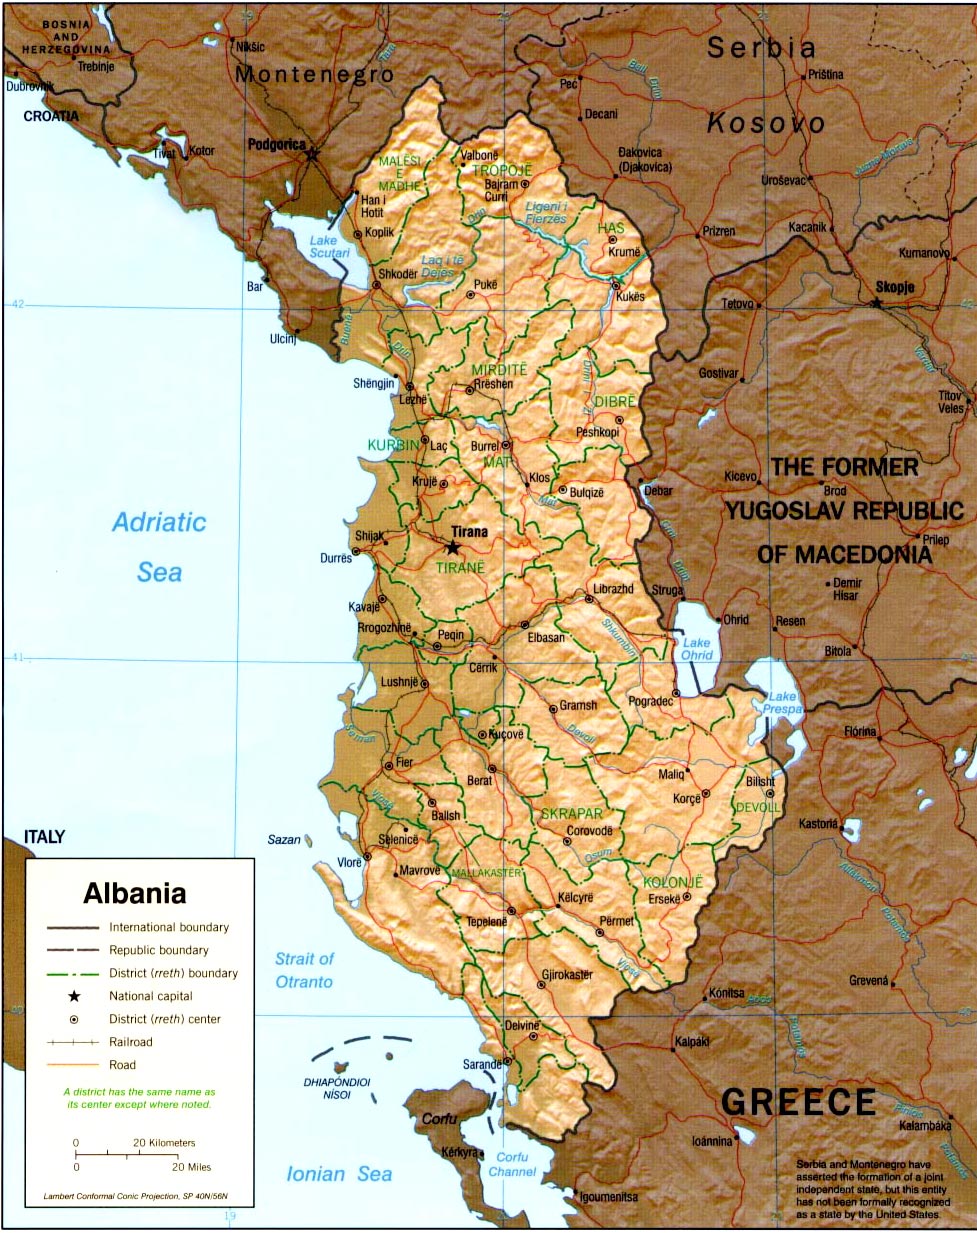 albania-map